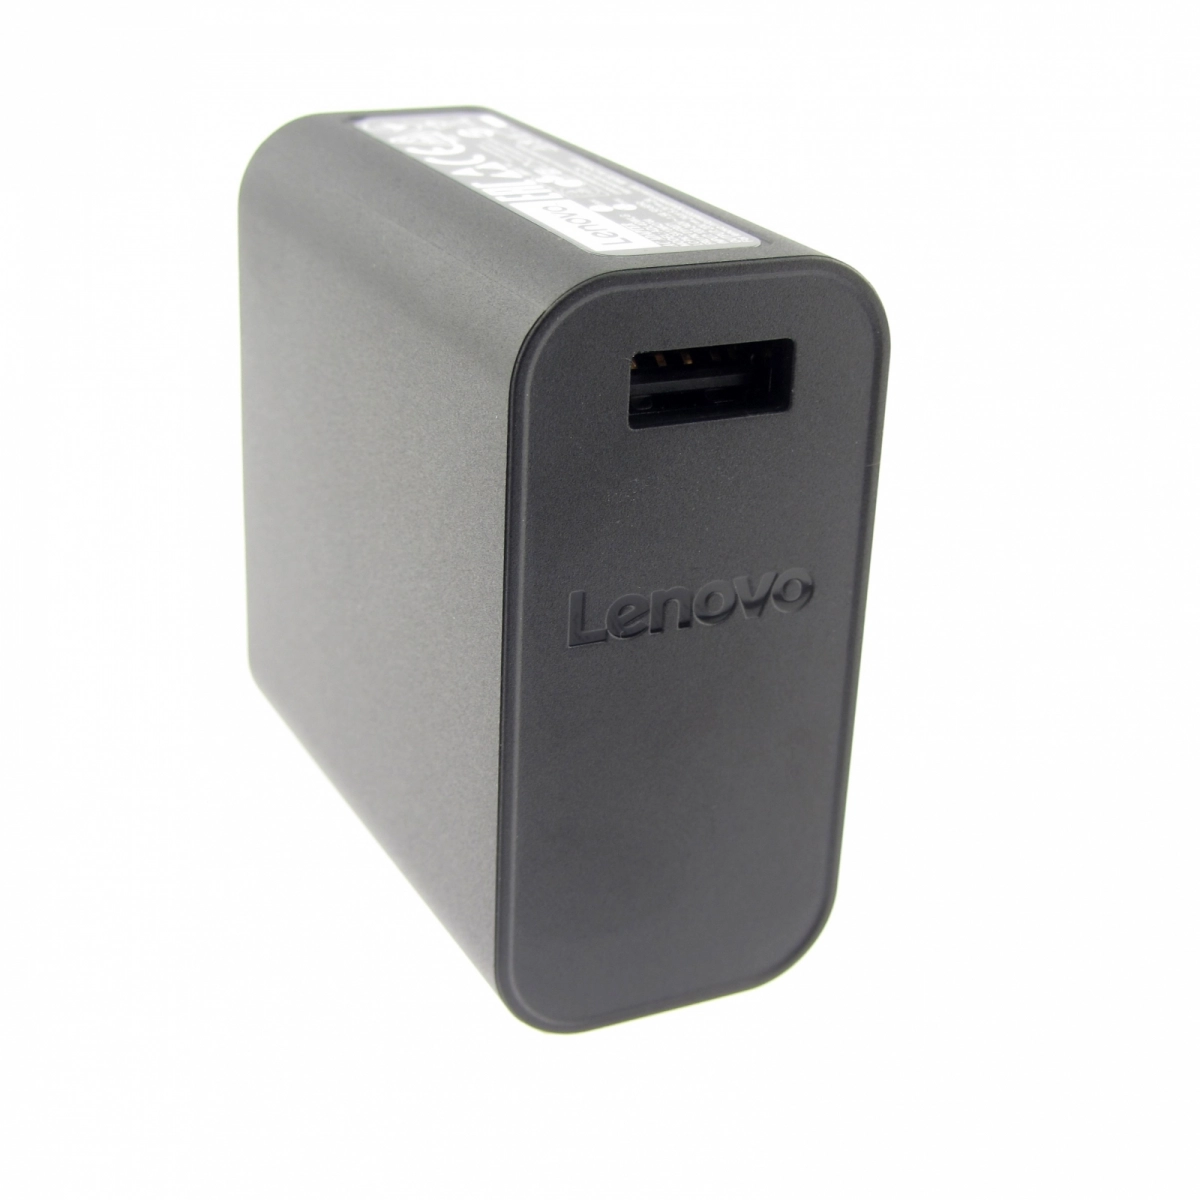 Original Netzteil für LENOVO ADL40WDB, 20V, 2A, Stecker USB, ohne USB-Kabel